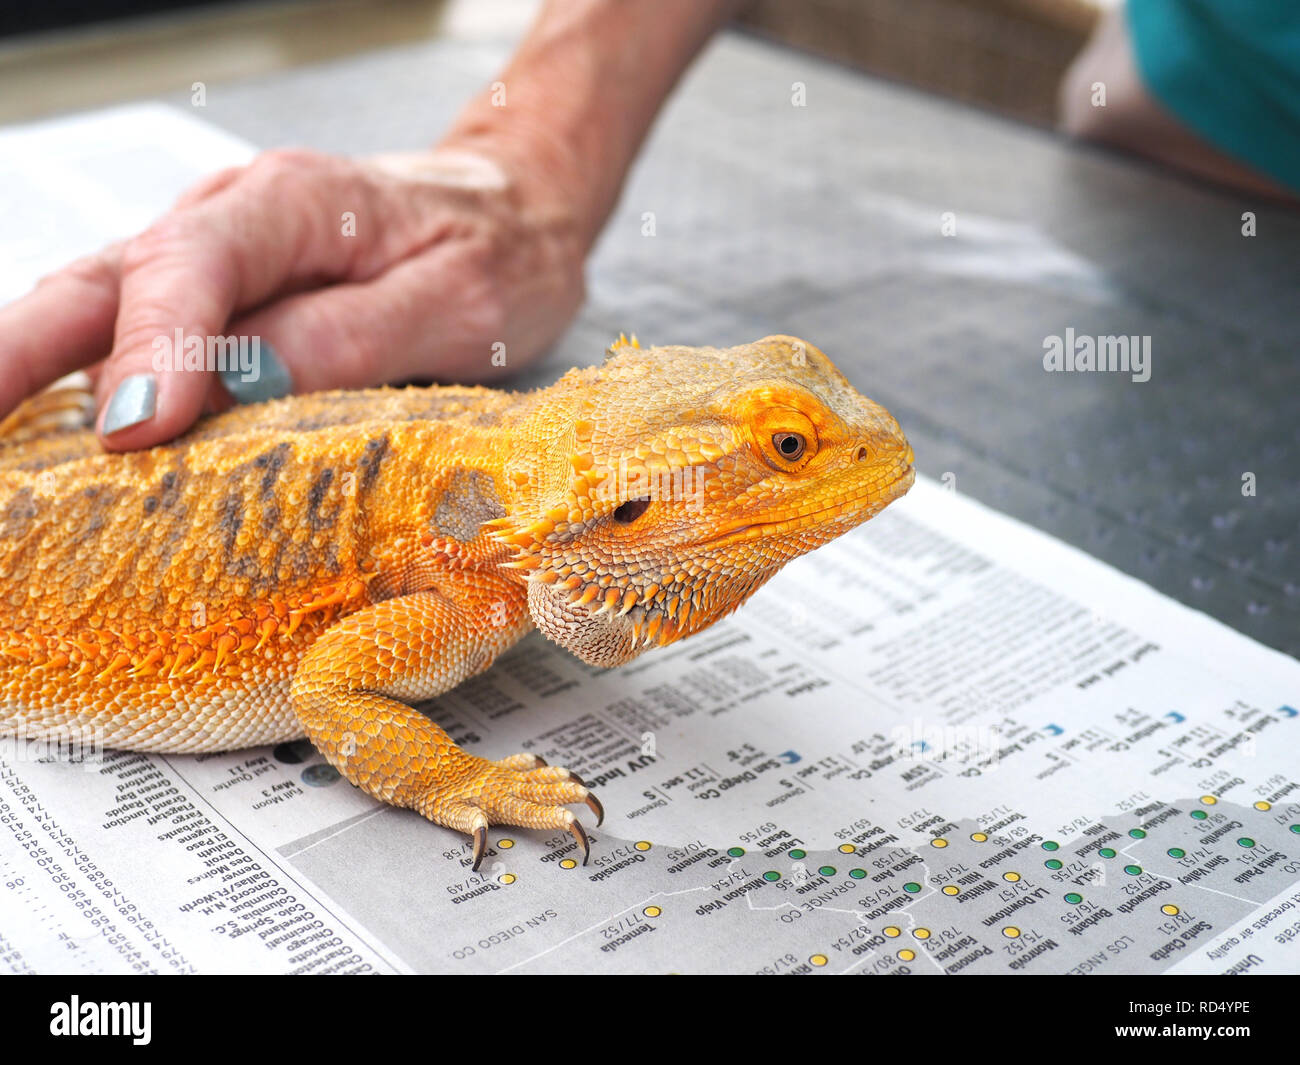 Petting an iguana at the LA zoo Stock Photo